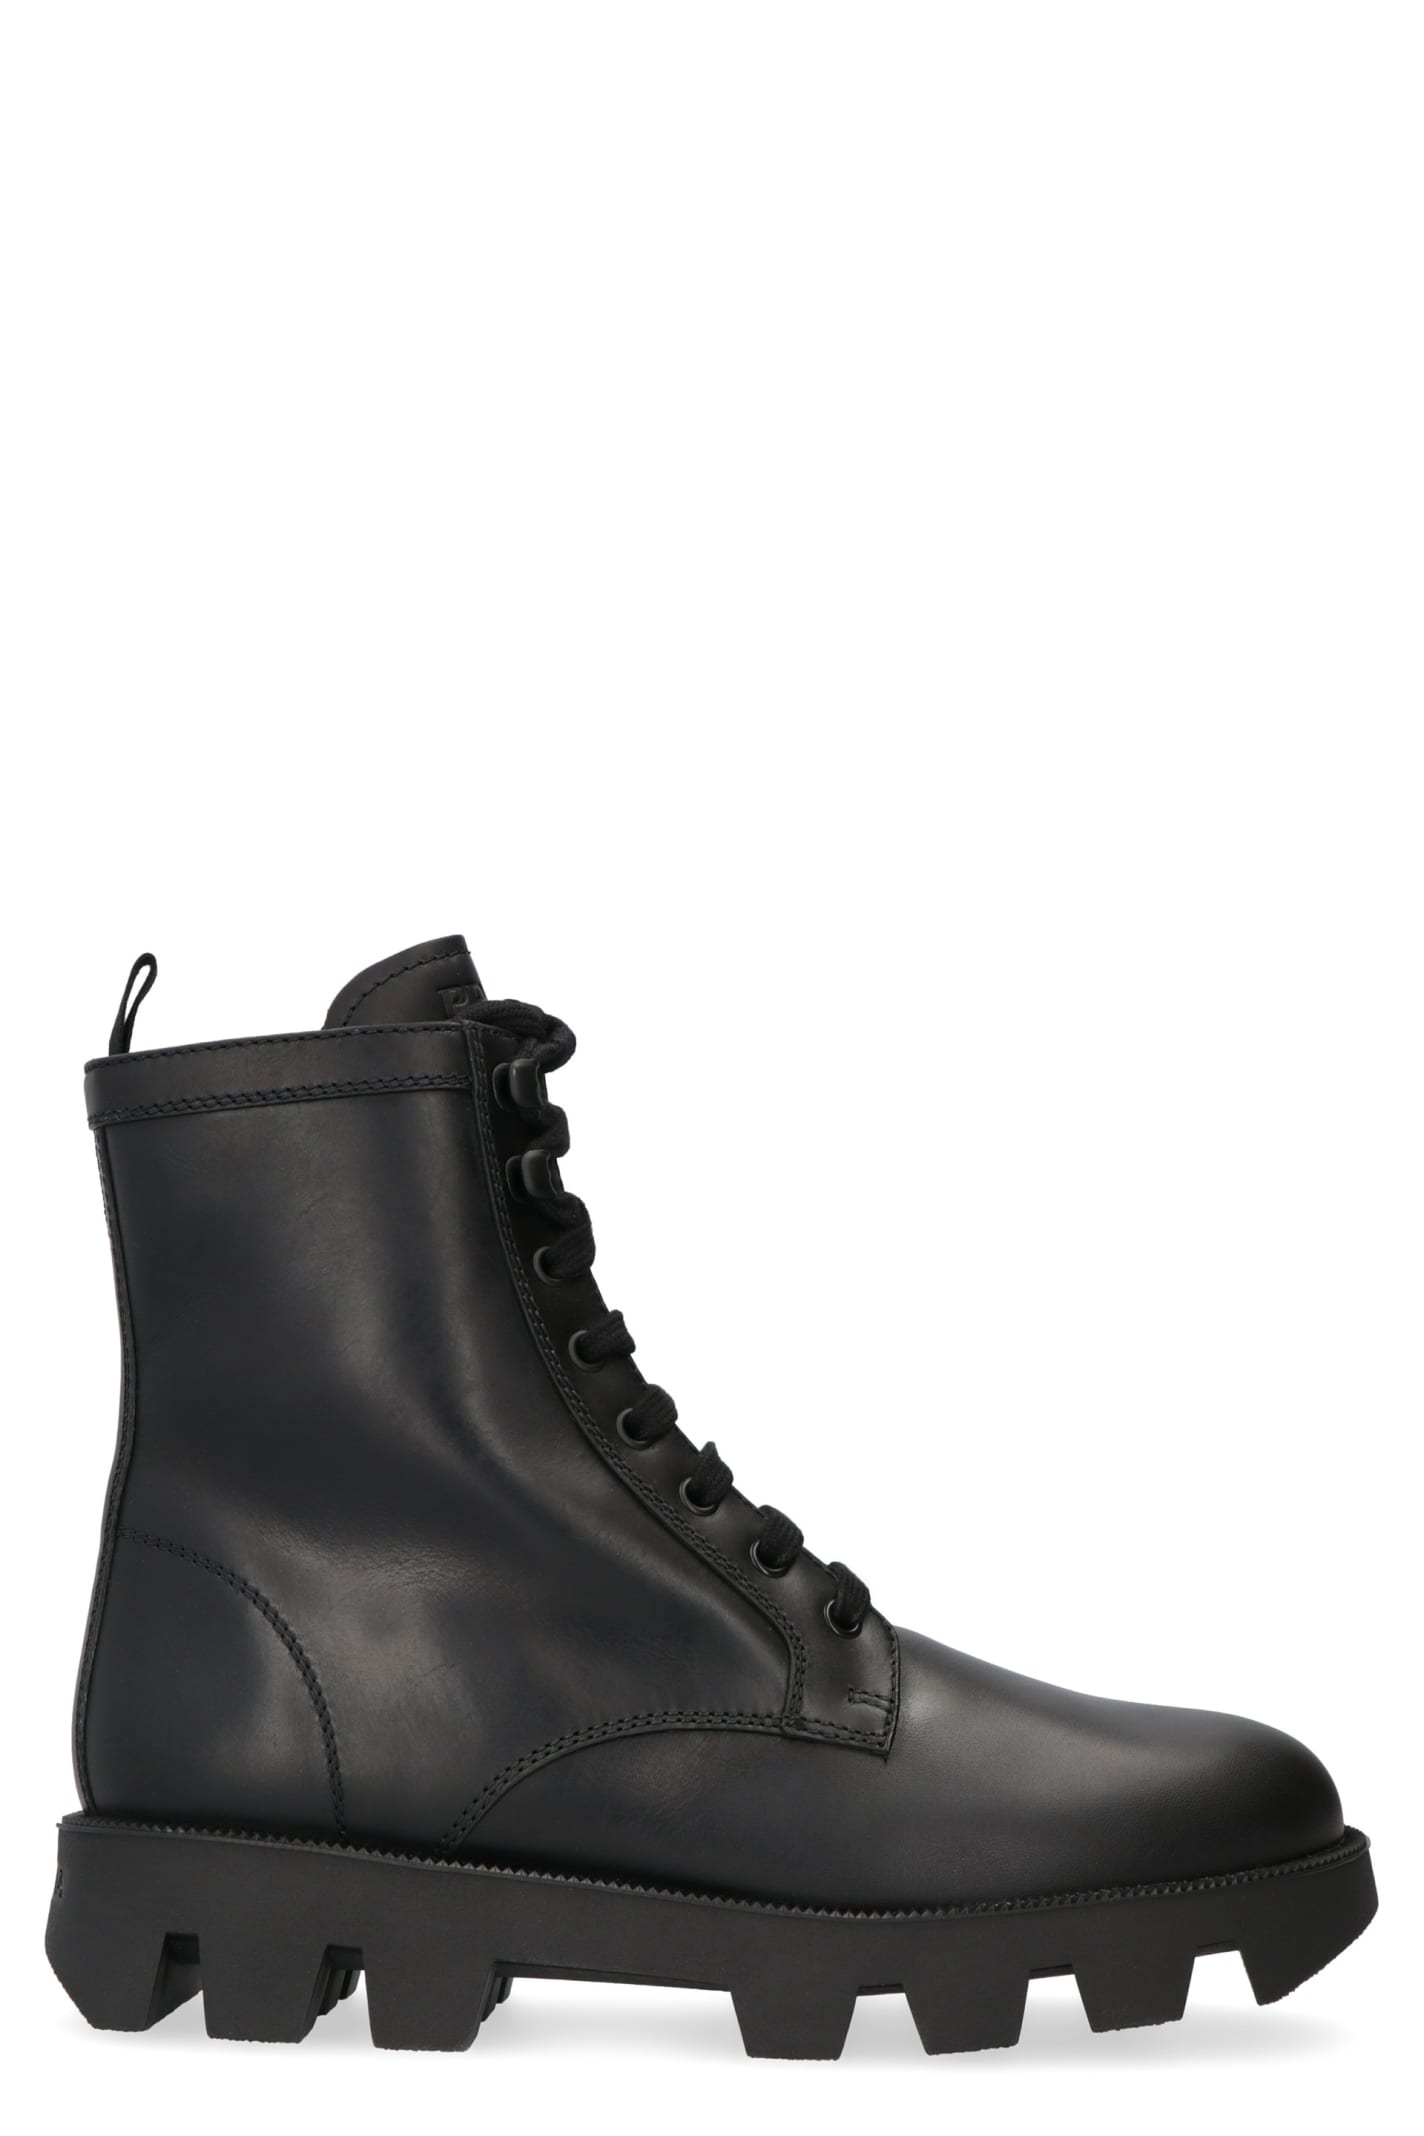 Prada Leather Combat Boots | Coshio Online Shop